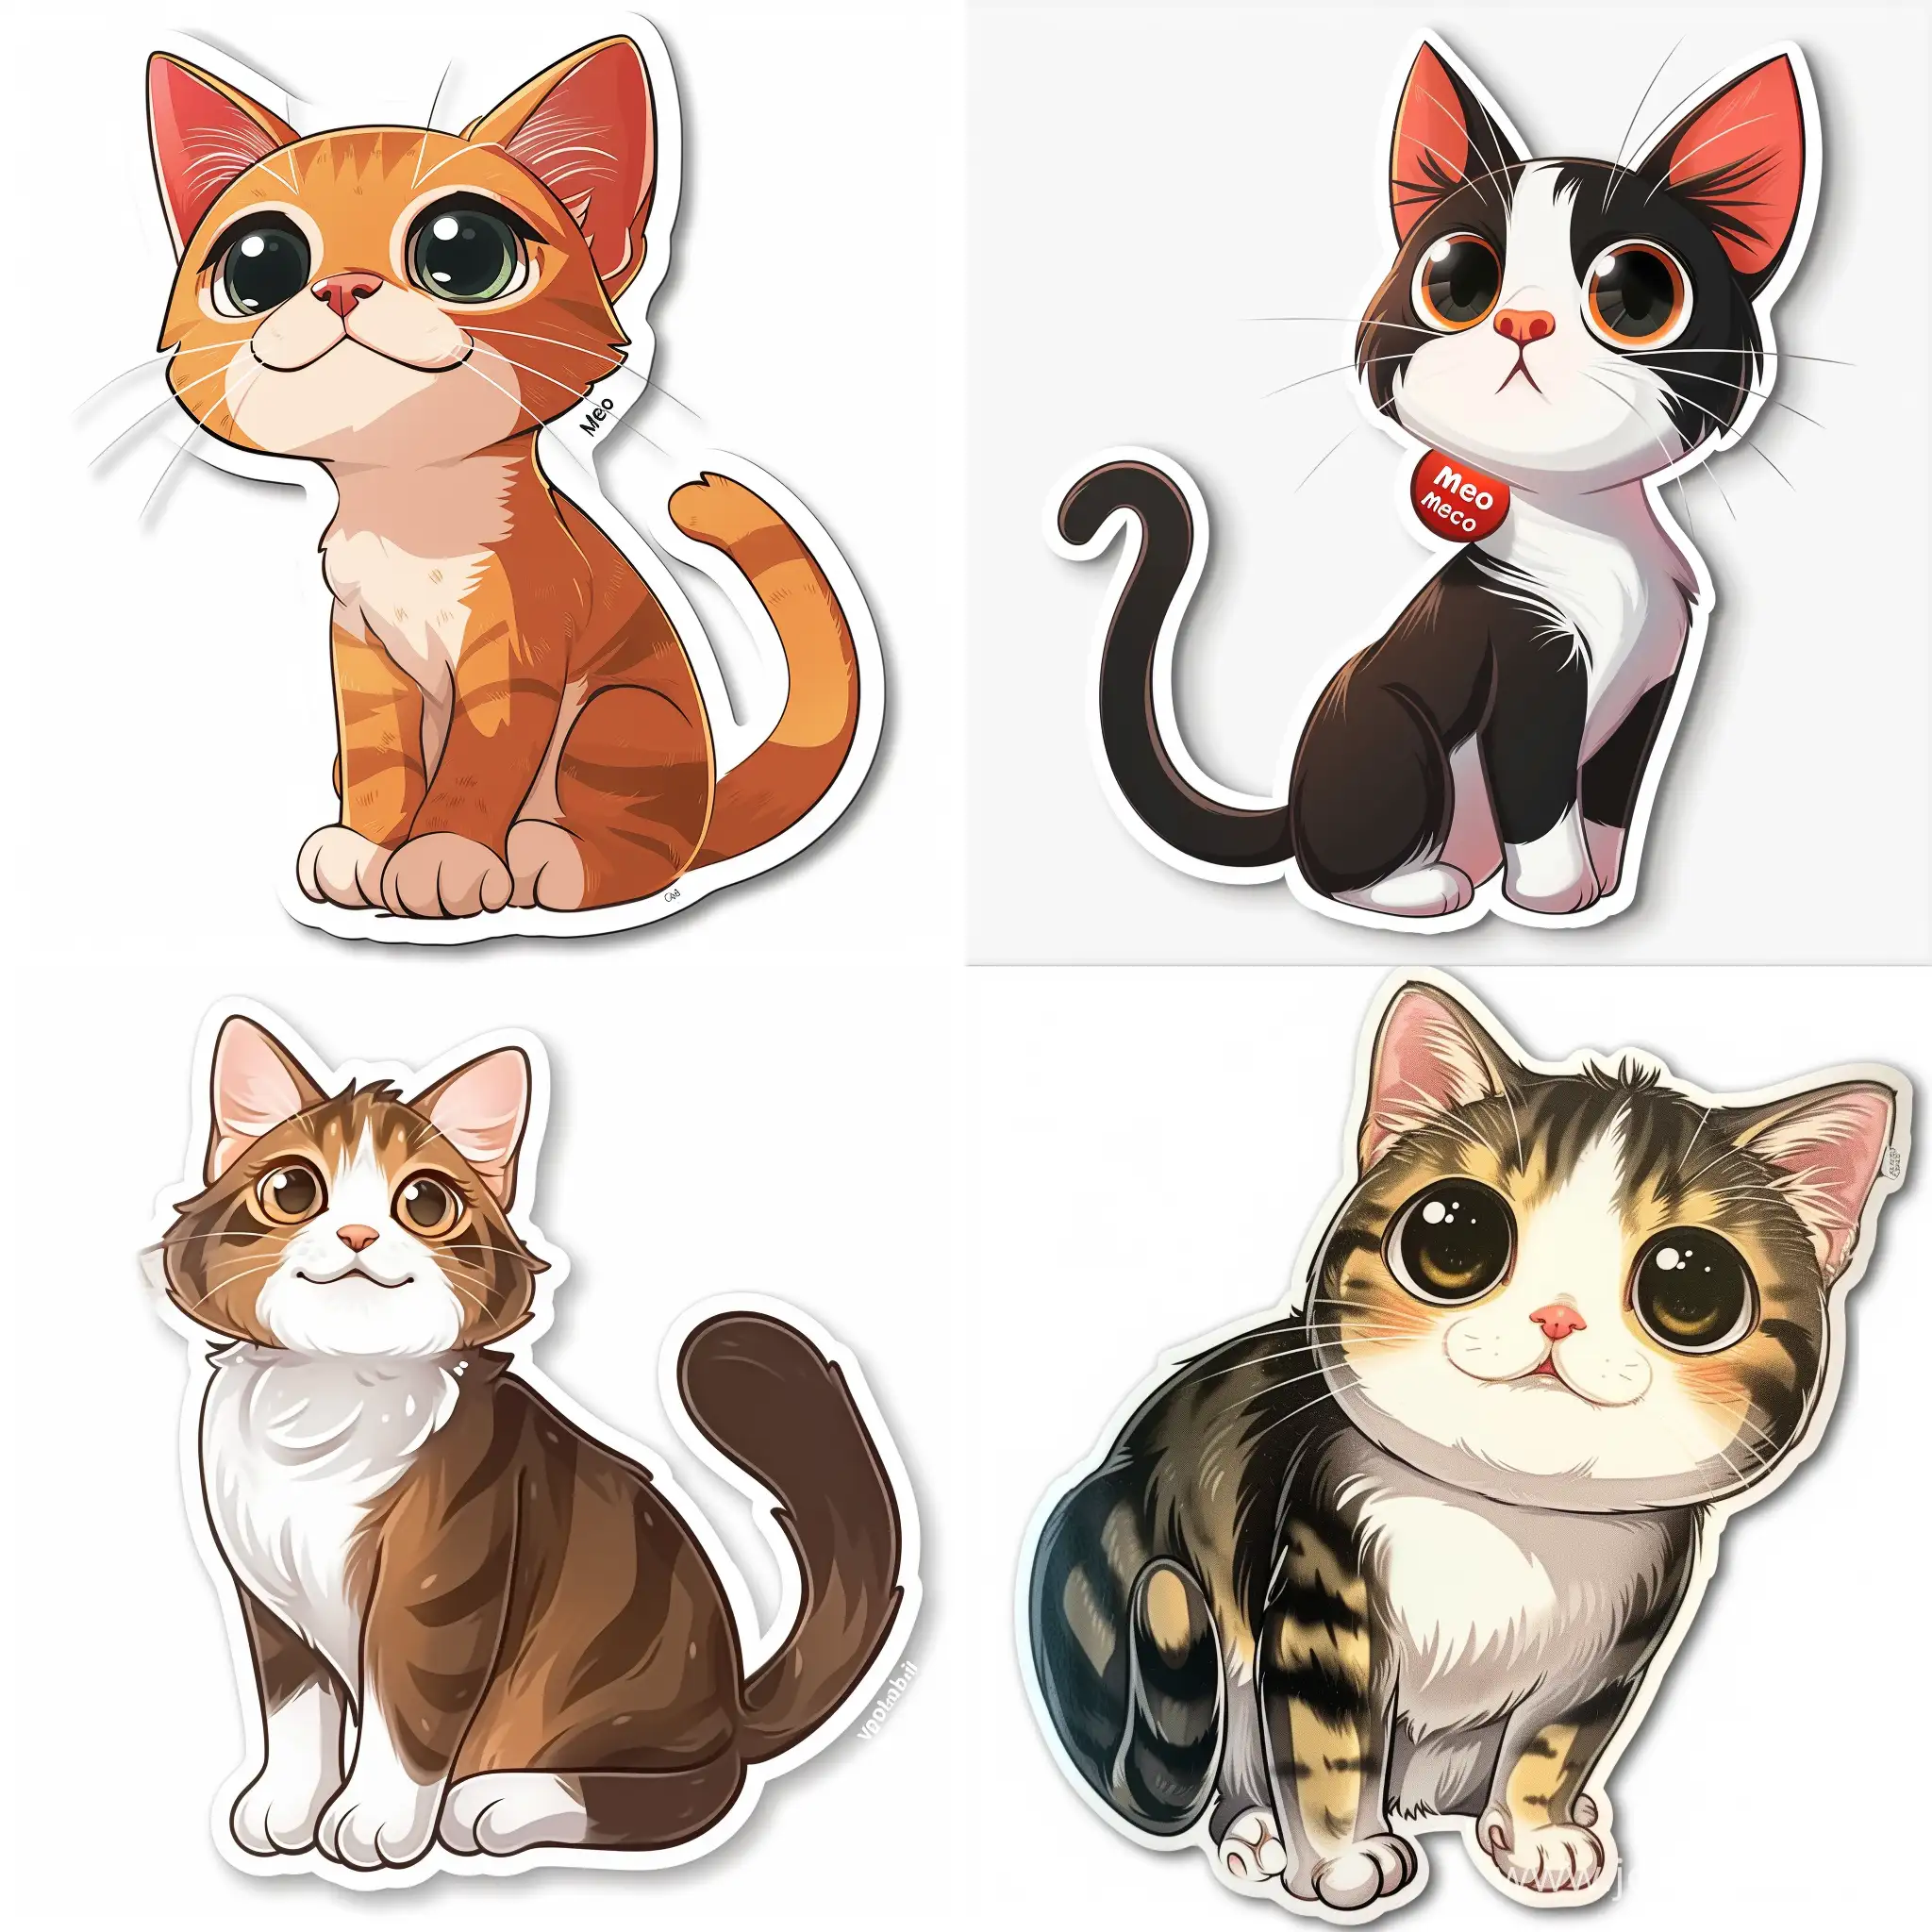 Adorable-VKontakte-Cat-Stickers-Expressive-Feline-Emotions-in-Versatile-11-Aspect-Ratio